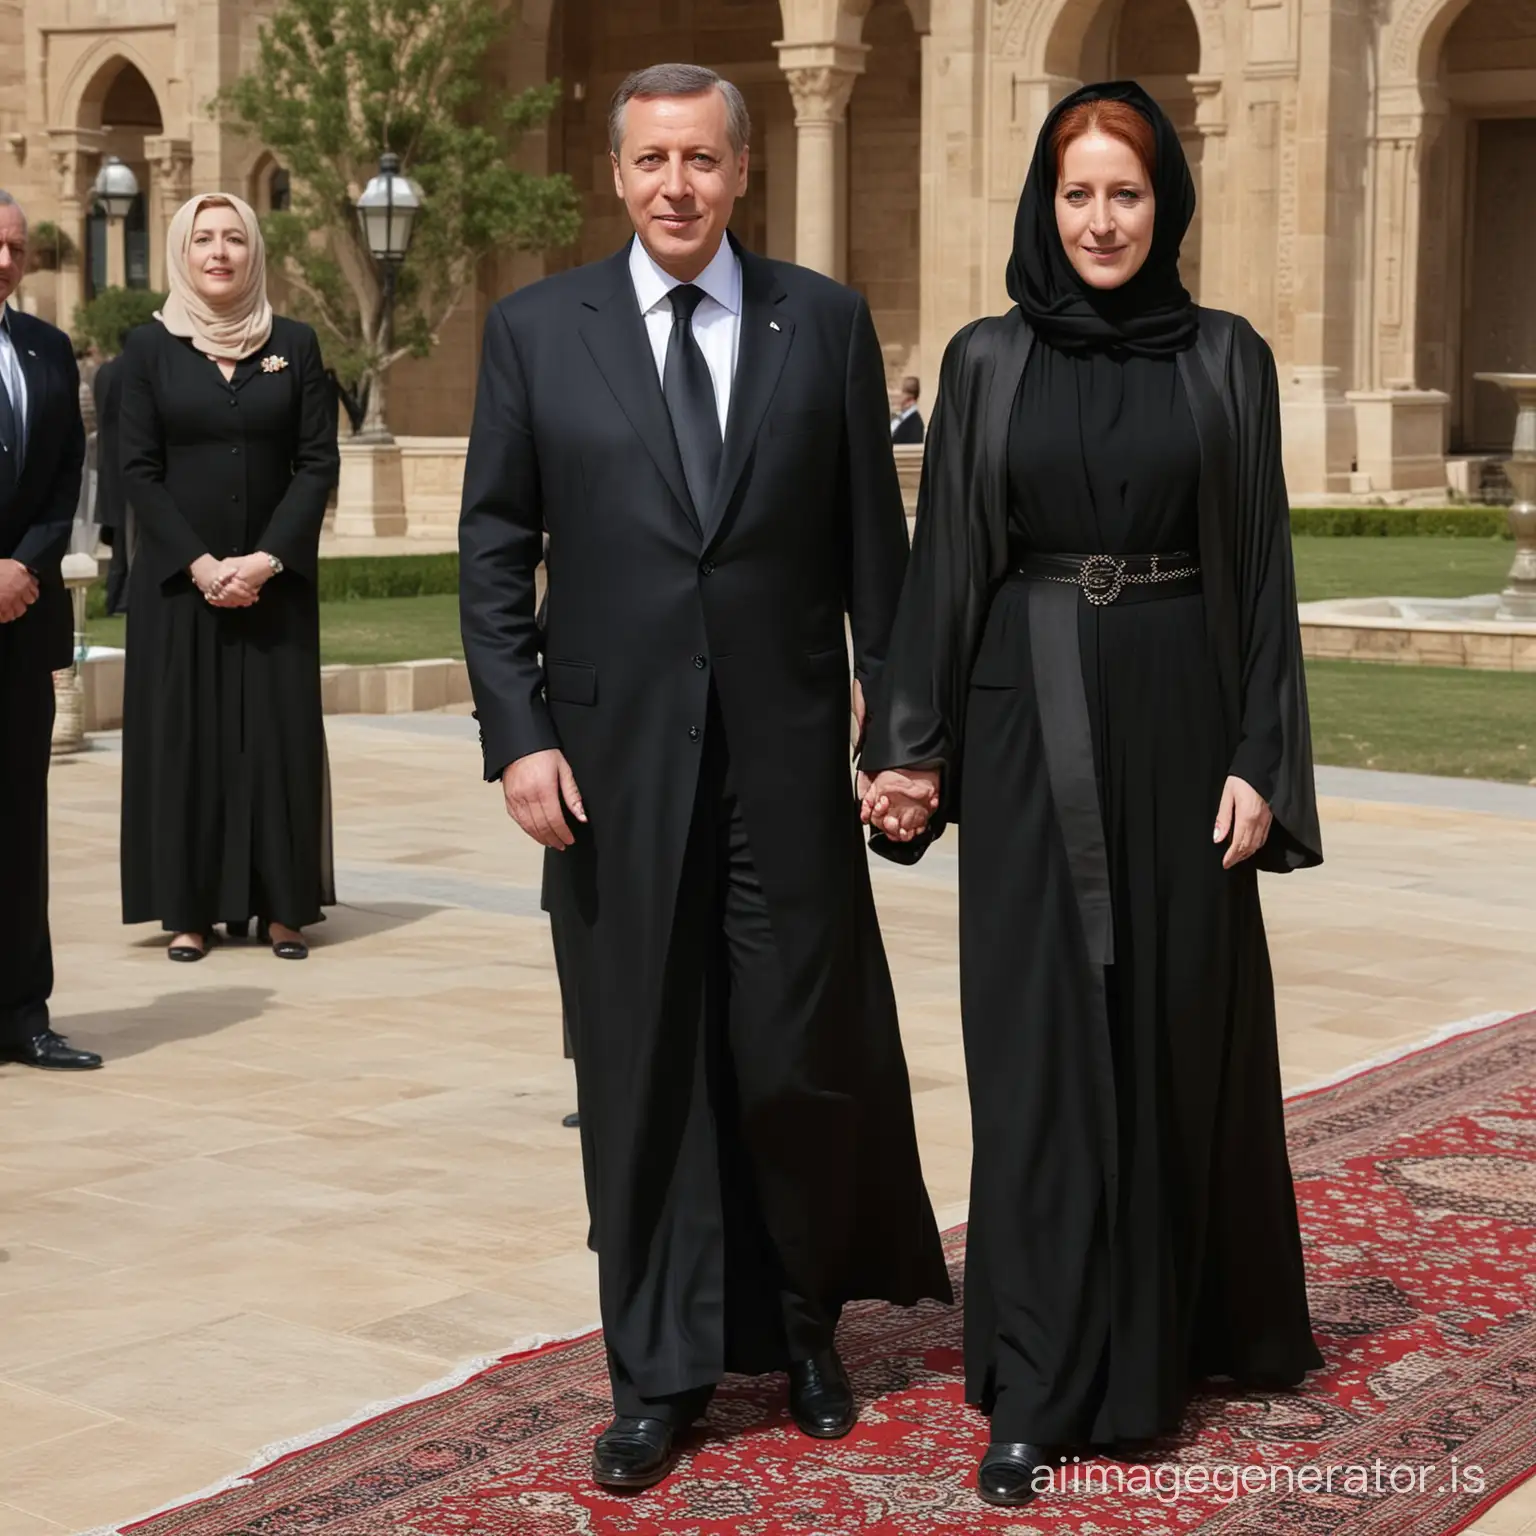 Gillian-Anderson-with-President-Erdogan-A-Cultural-Encounter-in-Islamic-Attire